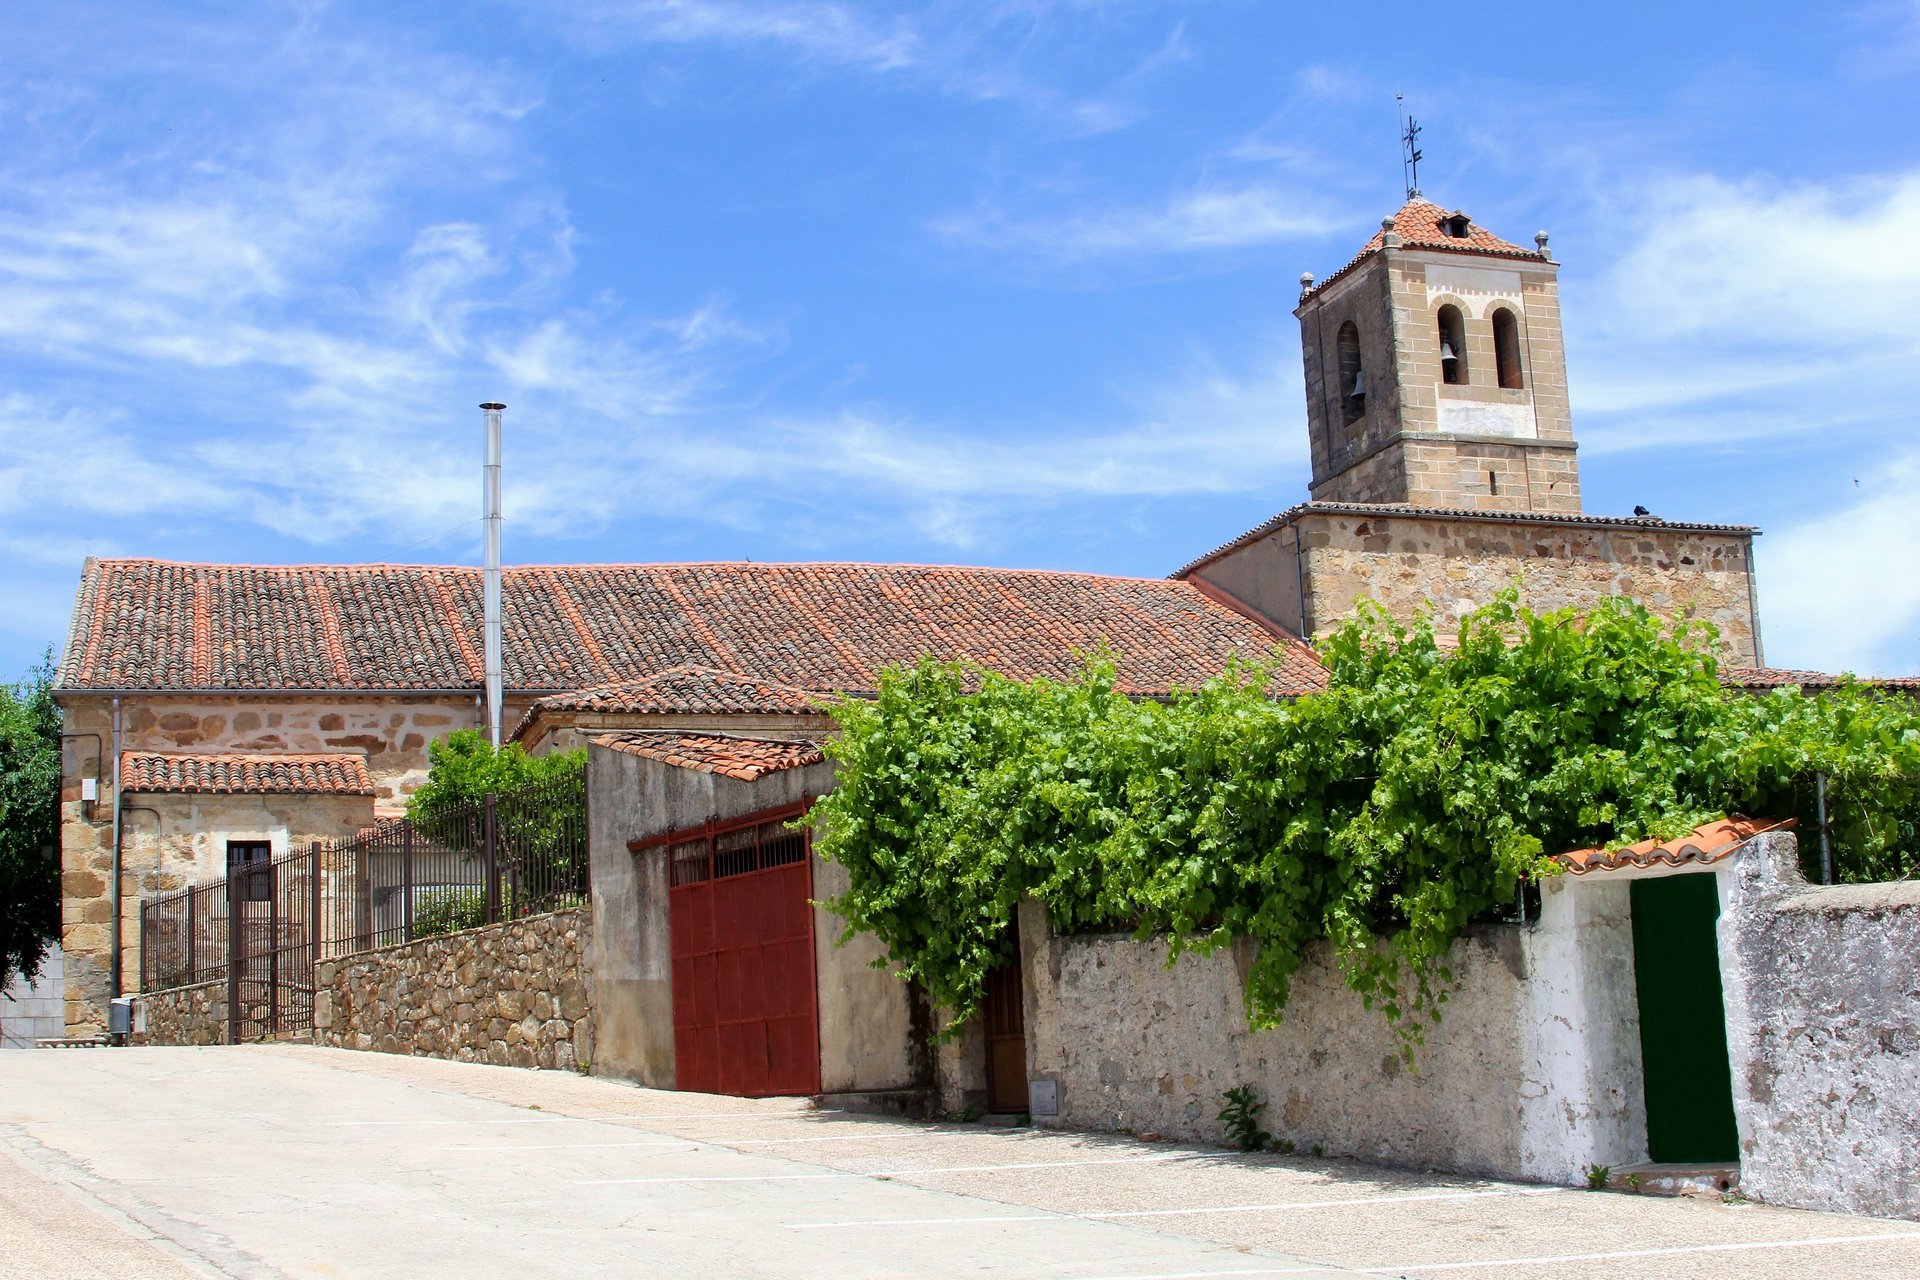 A church and vineyard in village of Candeleda, Sierra de Gredos.